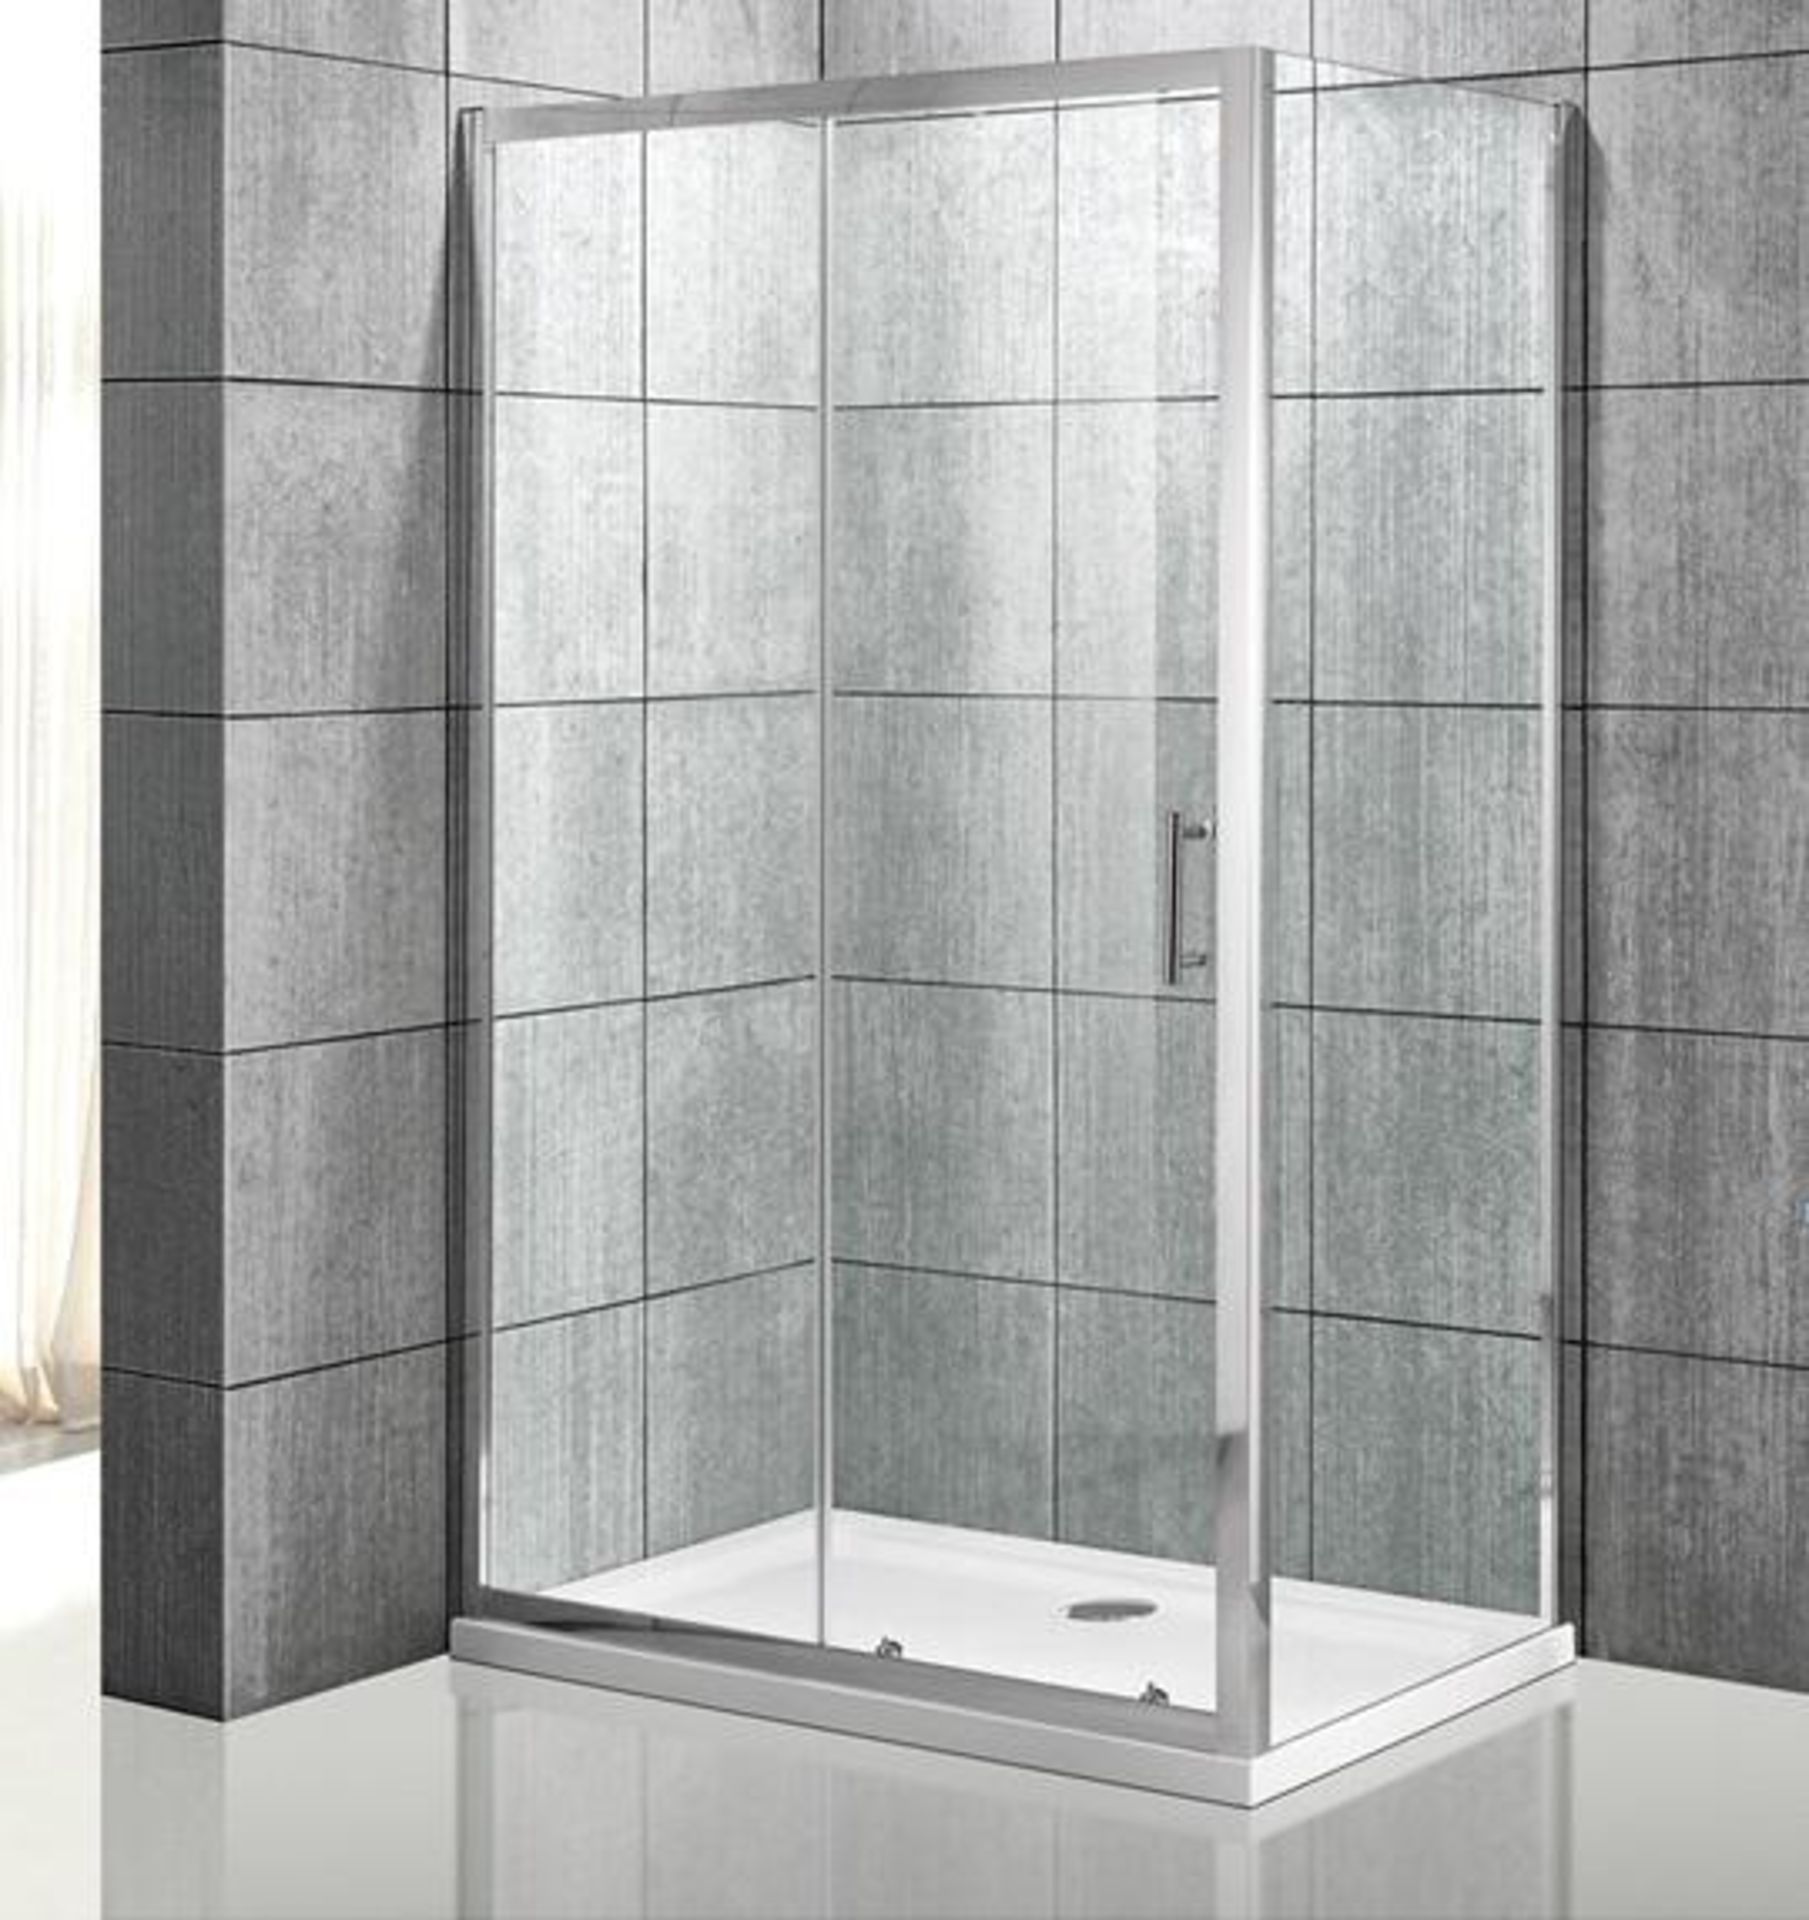 1 x Premium Quality Rectangular Shower Enclosure - Dimensions: 80x120x195cm - Brand New & Boxed - Re